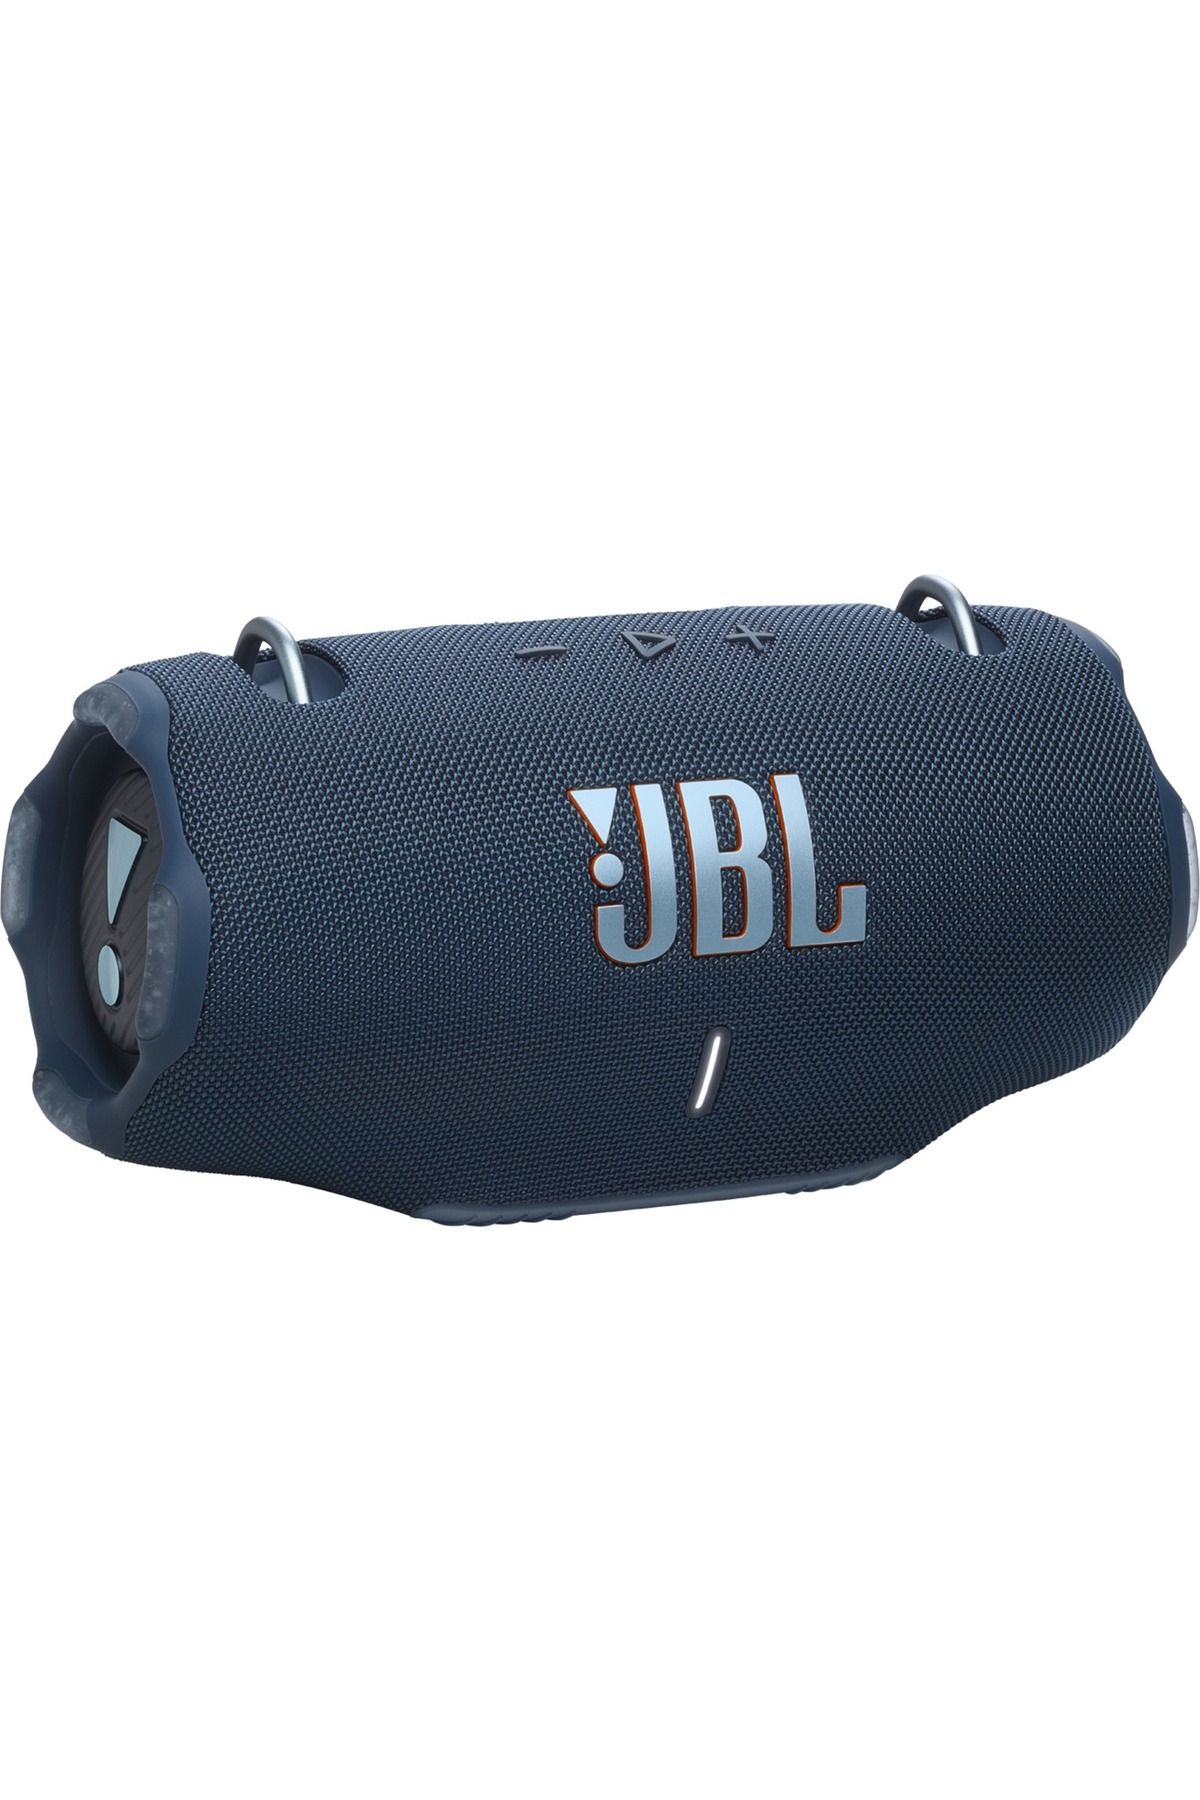 JBL Xtreme 4 Bluetooth Hoparlör IP67, Mavi